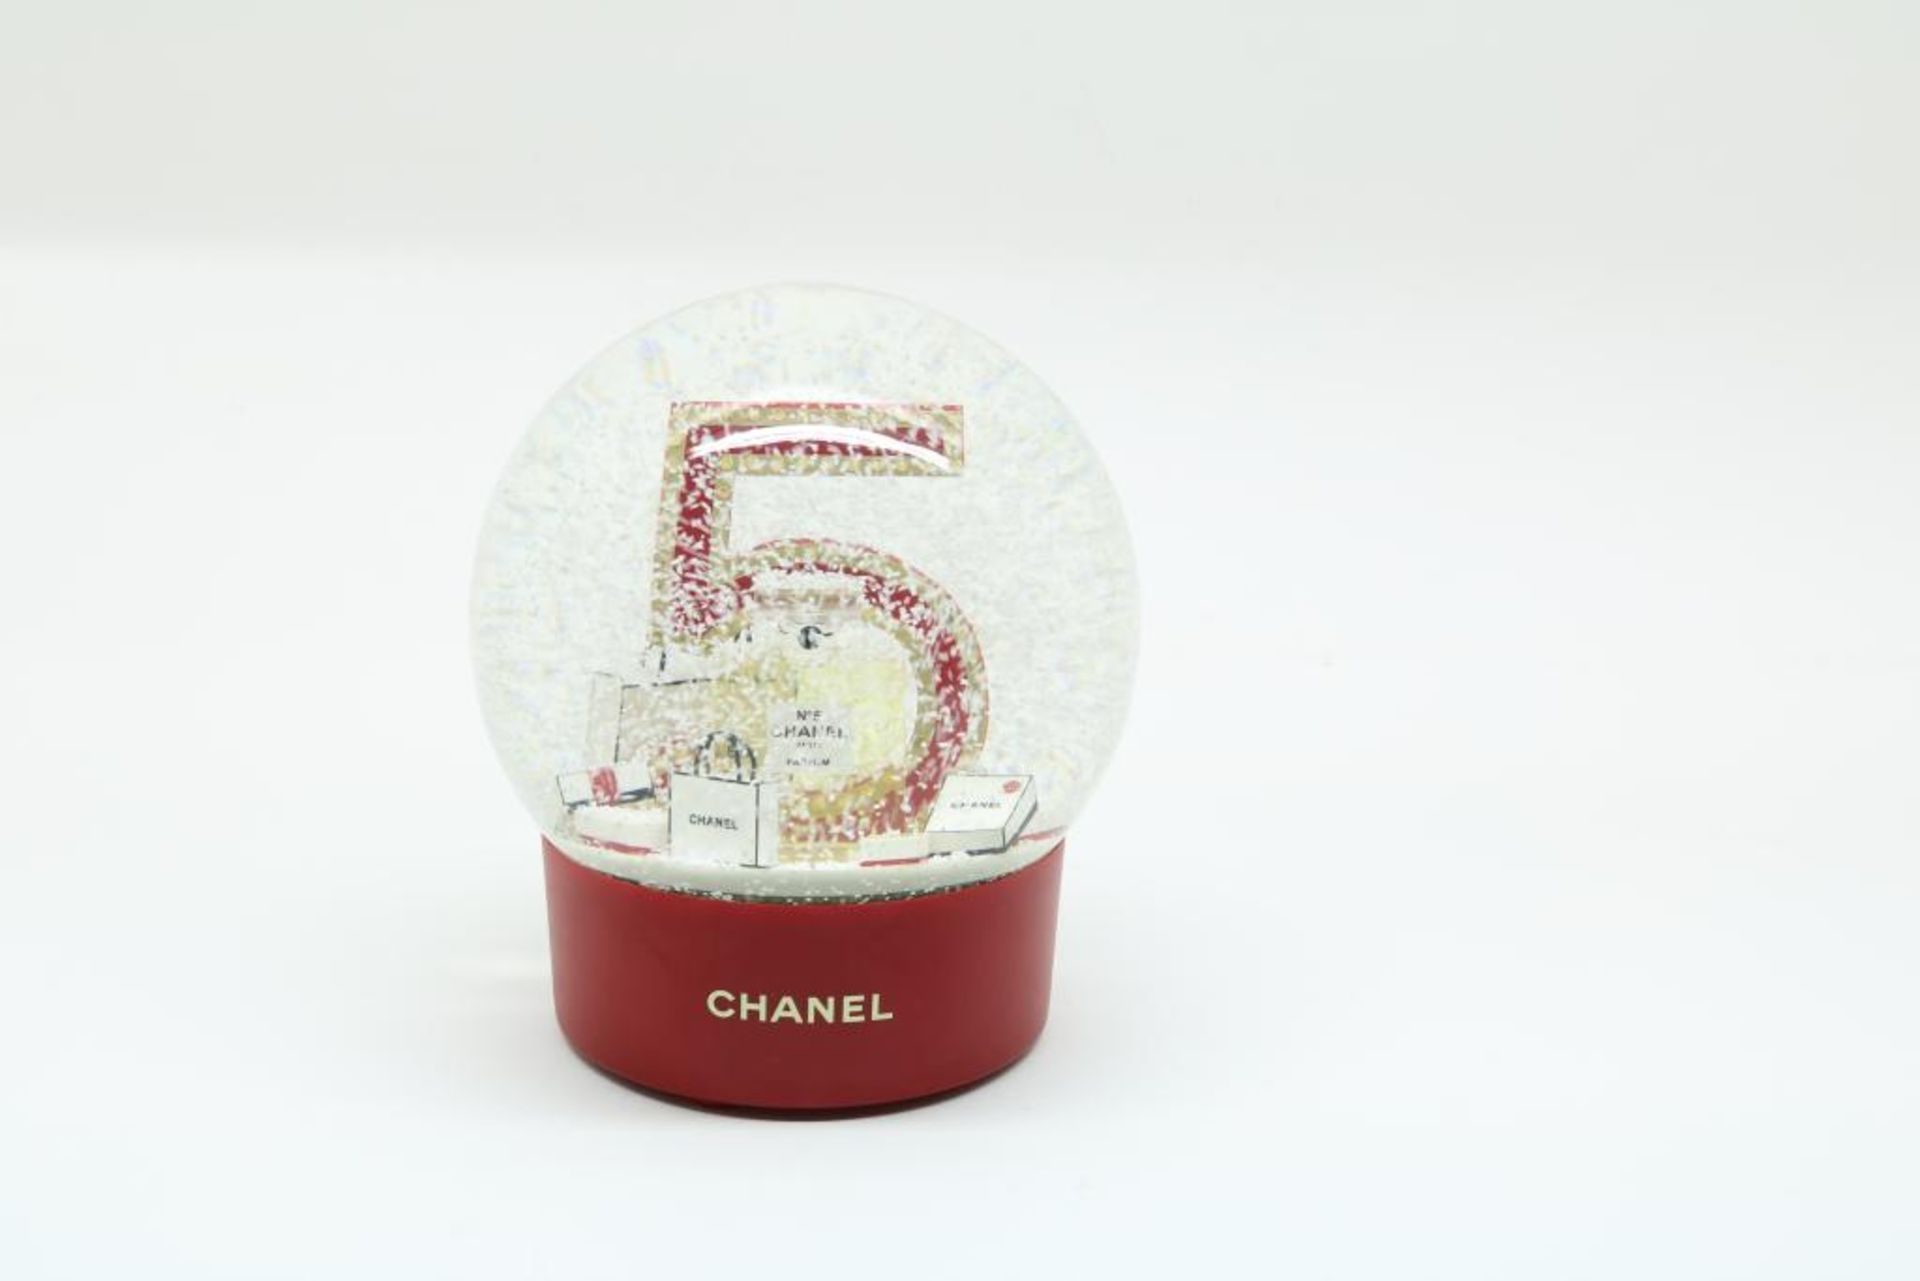 Chanel grote sneeuwbol - Chanel 5